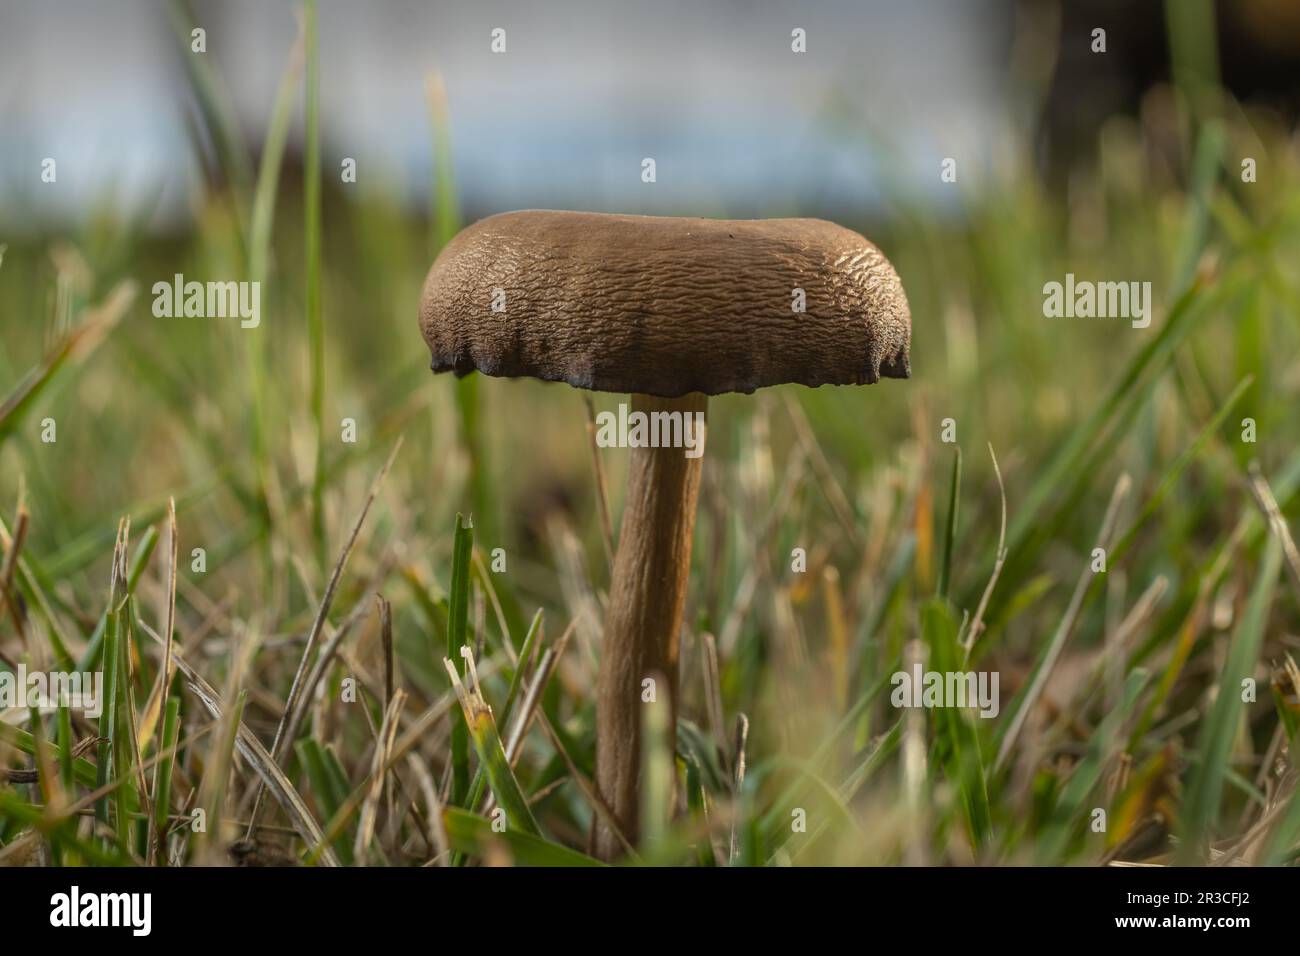 Small mushroom in the garden Stock Photo